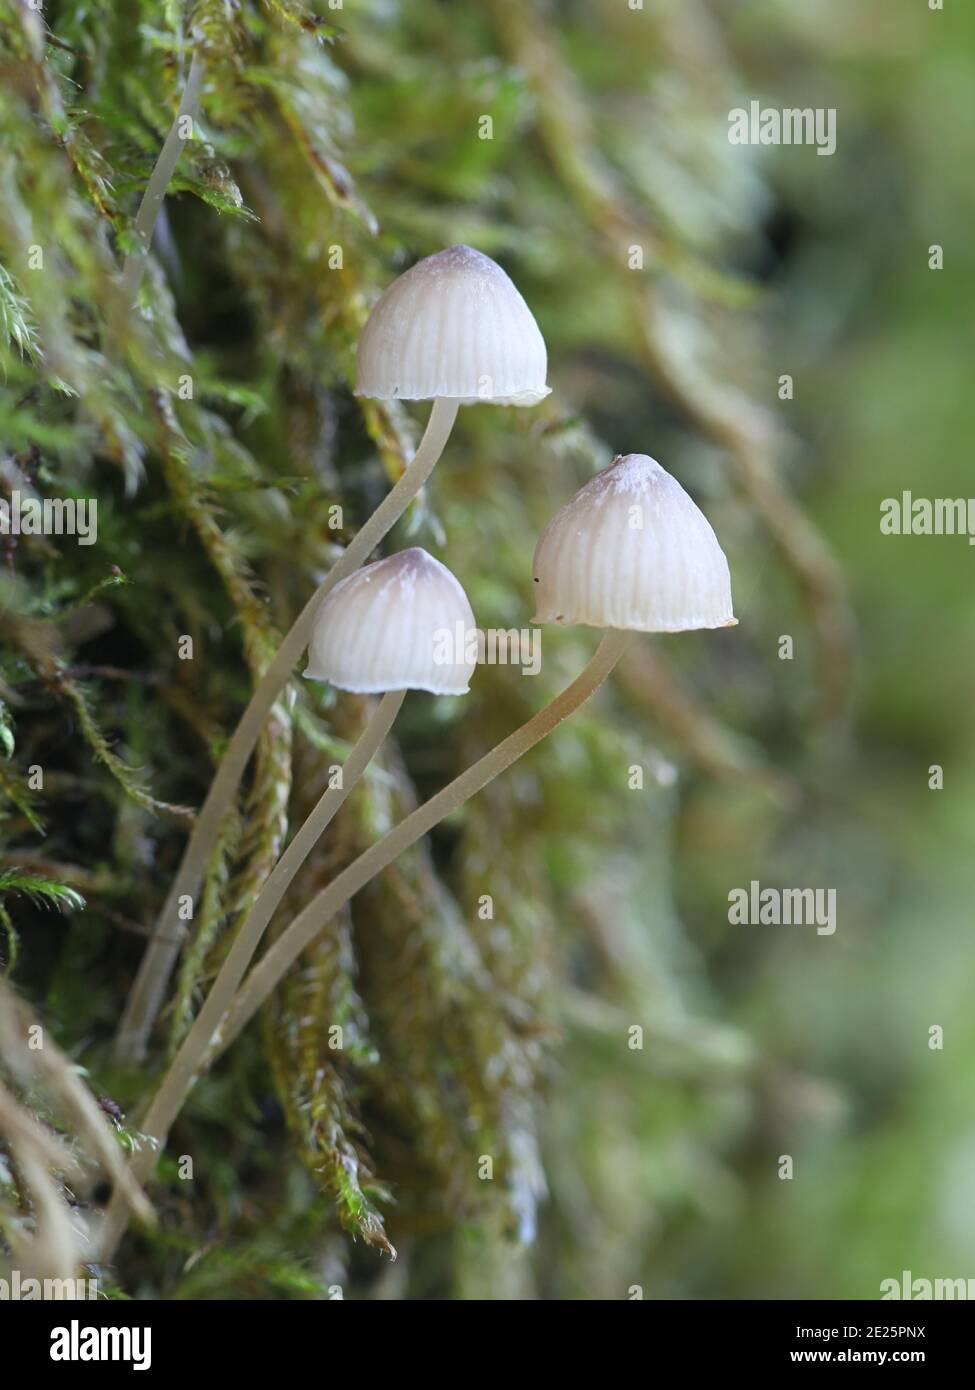 Phloeomana hiemalis, also called Mycena hiemalis, commonly known as Winter bonnet, wild mushroom from Finland Stock Photo